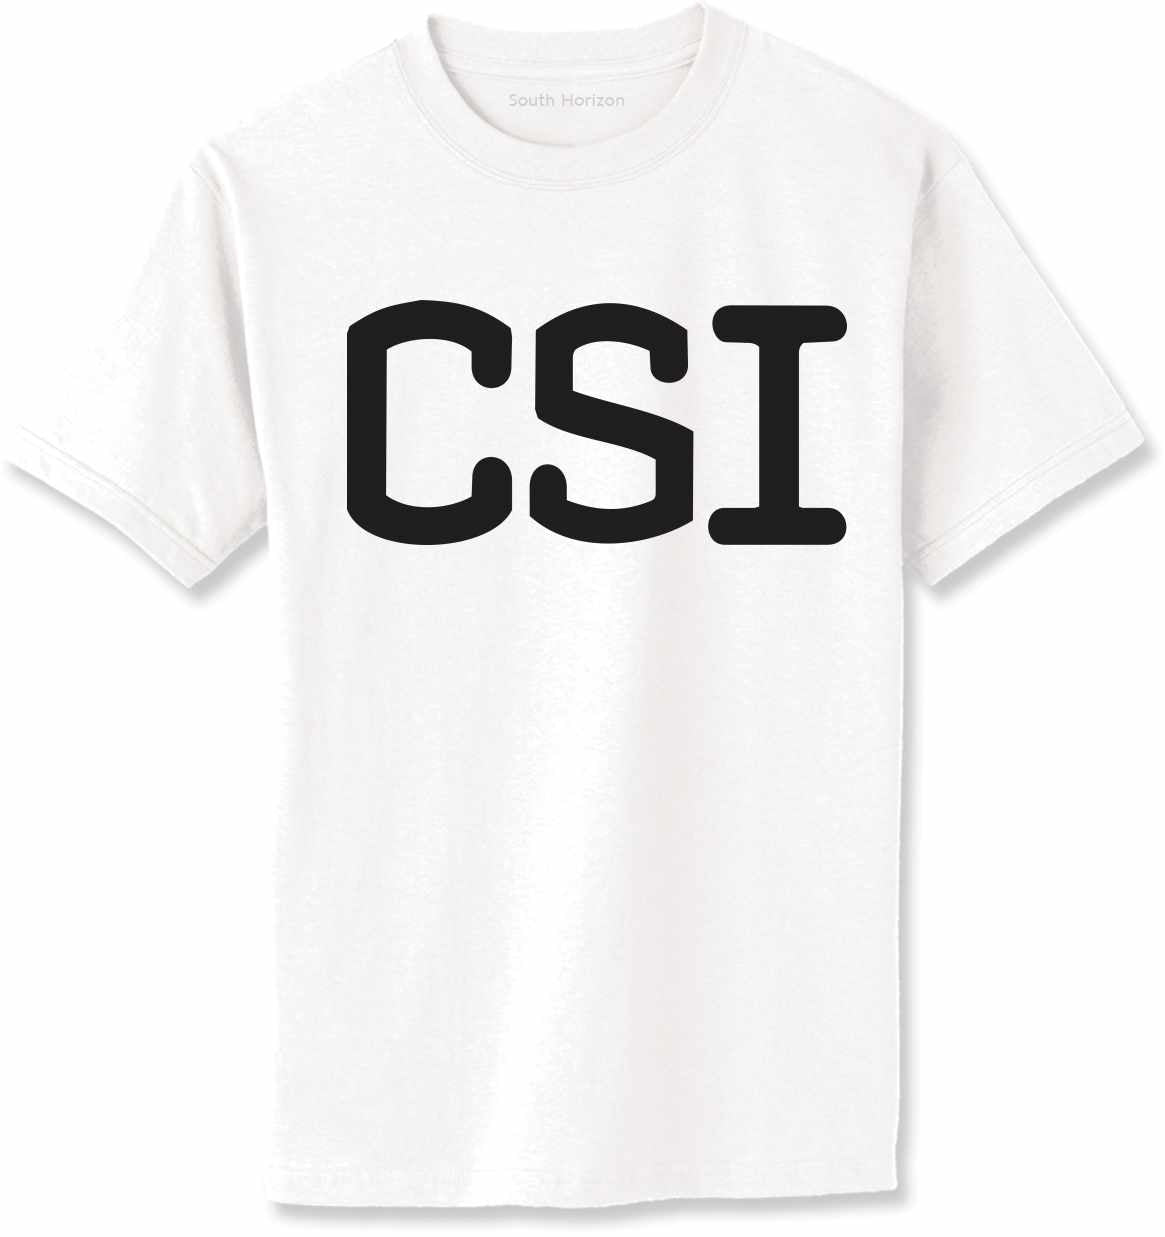 C S I Adult T-Shirt